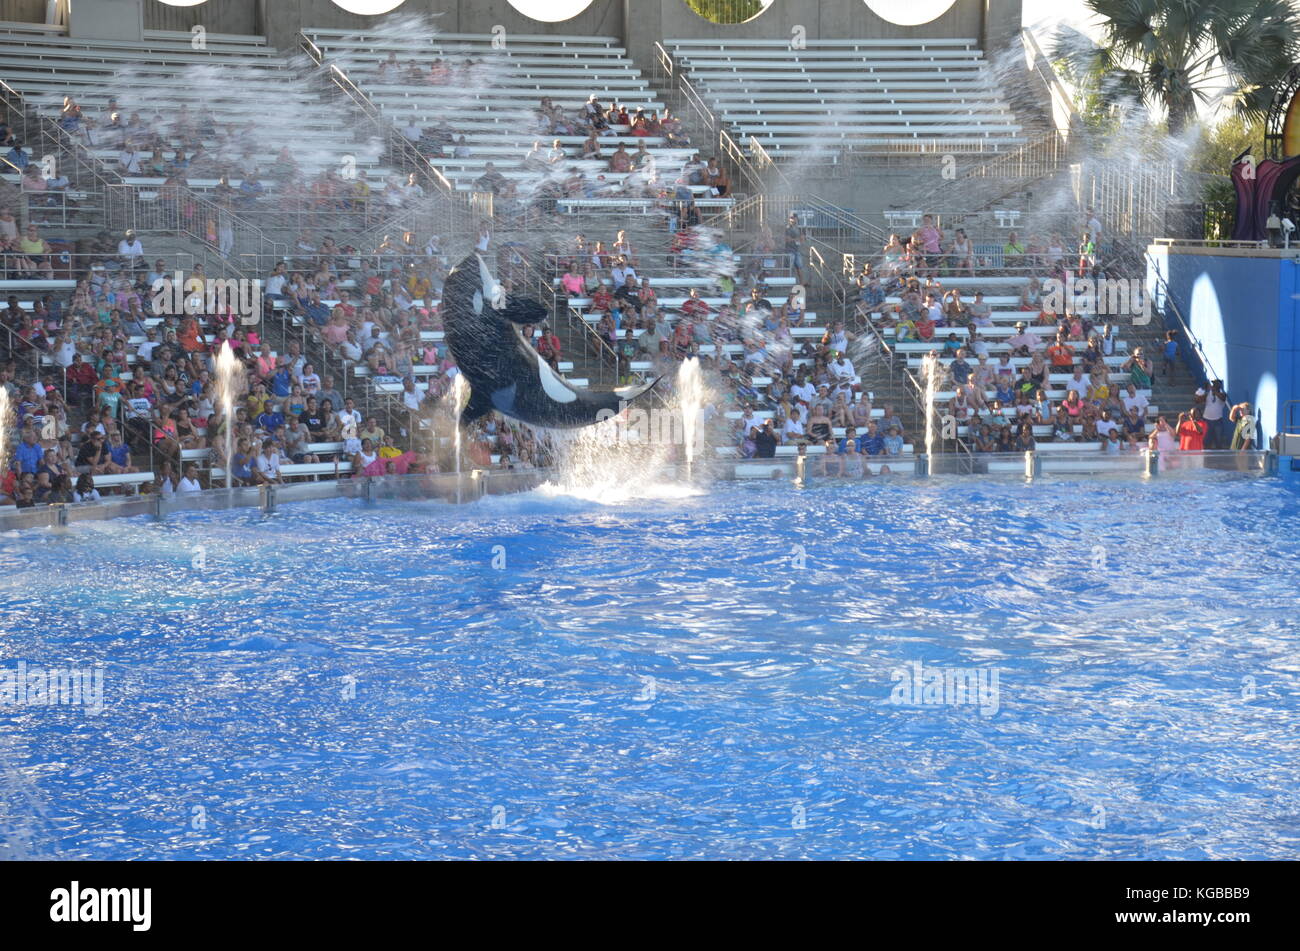 Performance of killer whales at Shamu Stadium, SeaWorld, Orlando ...